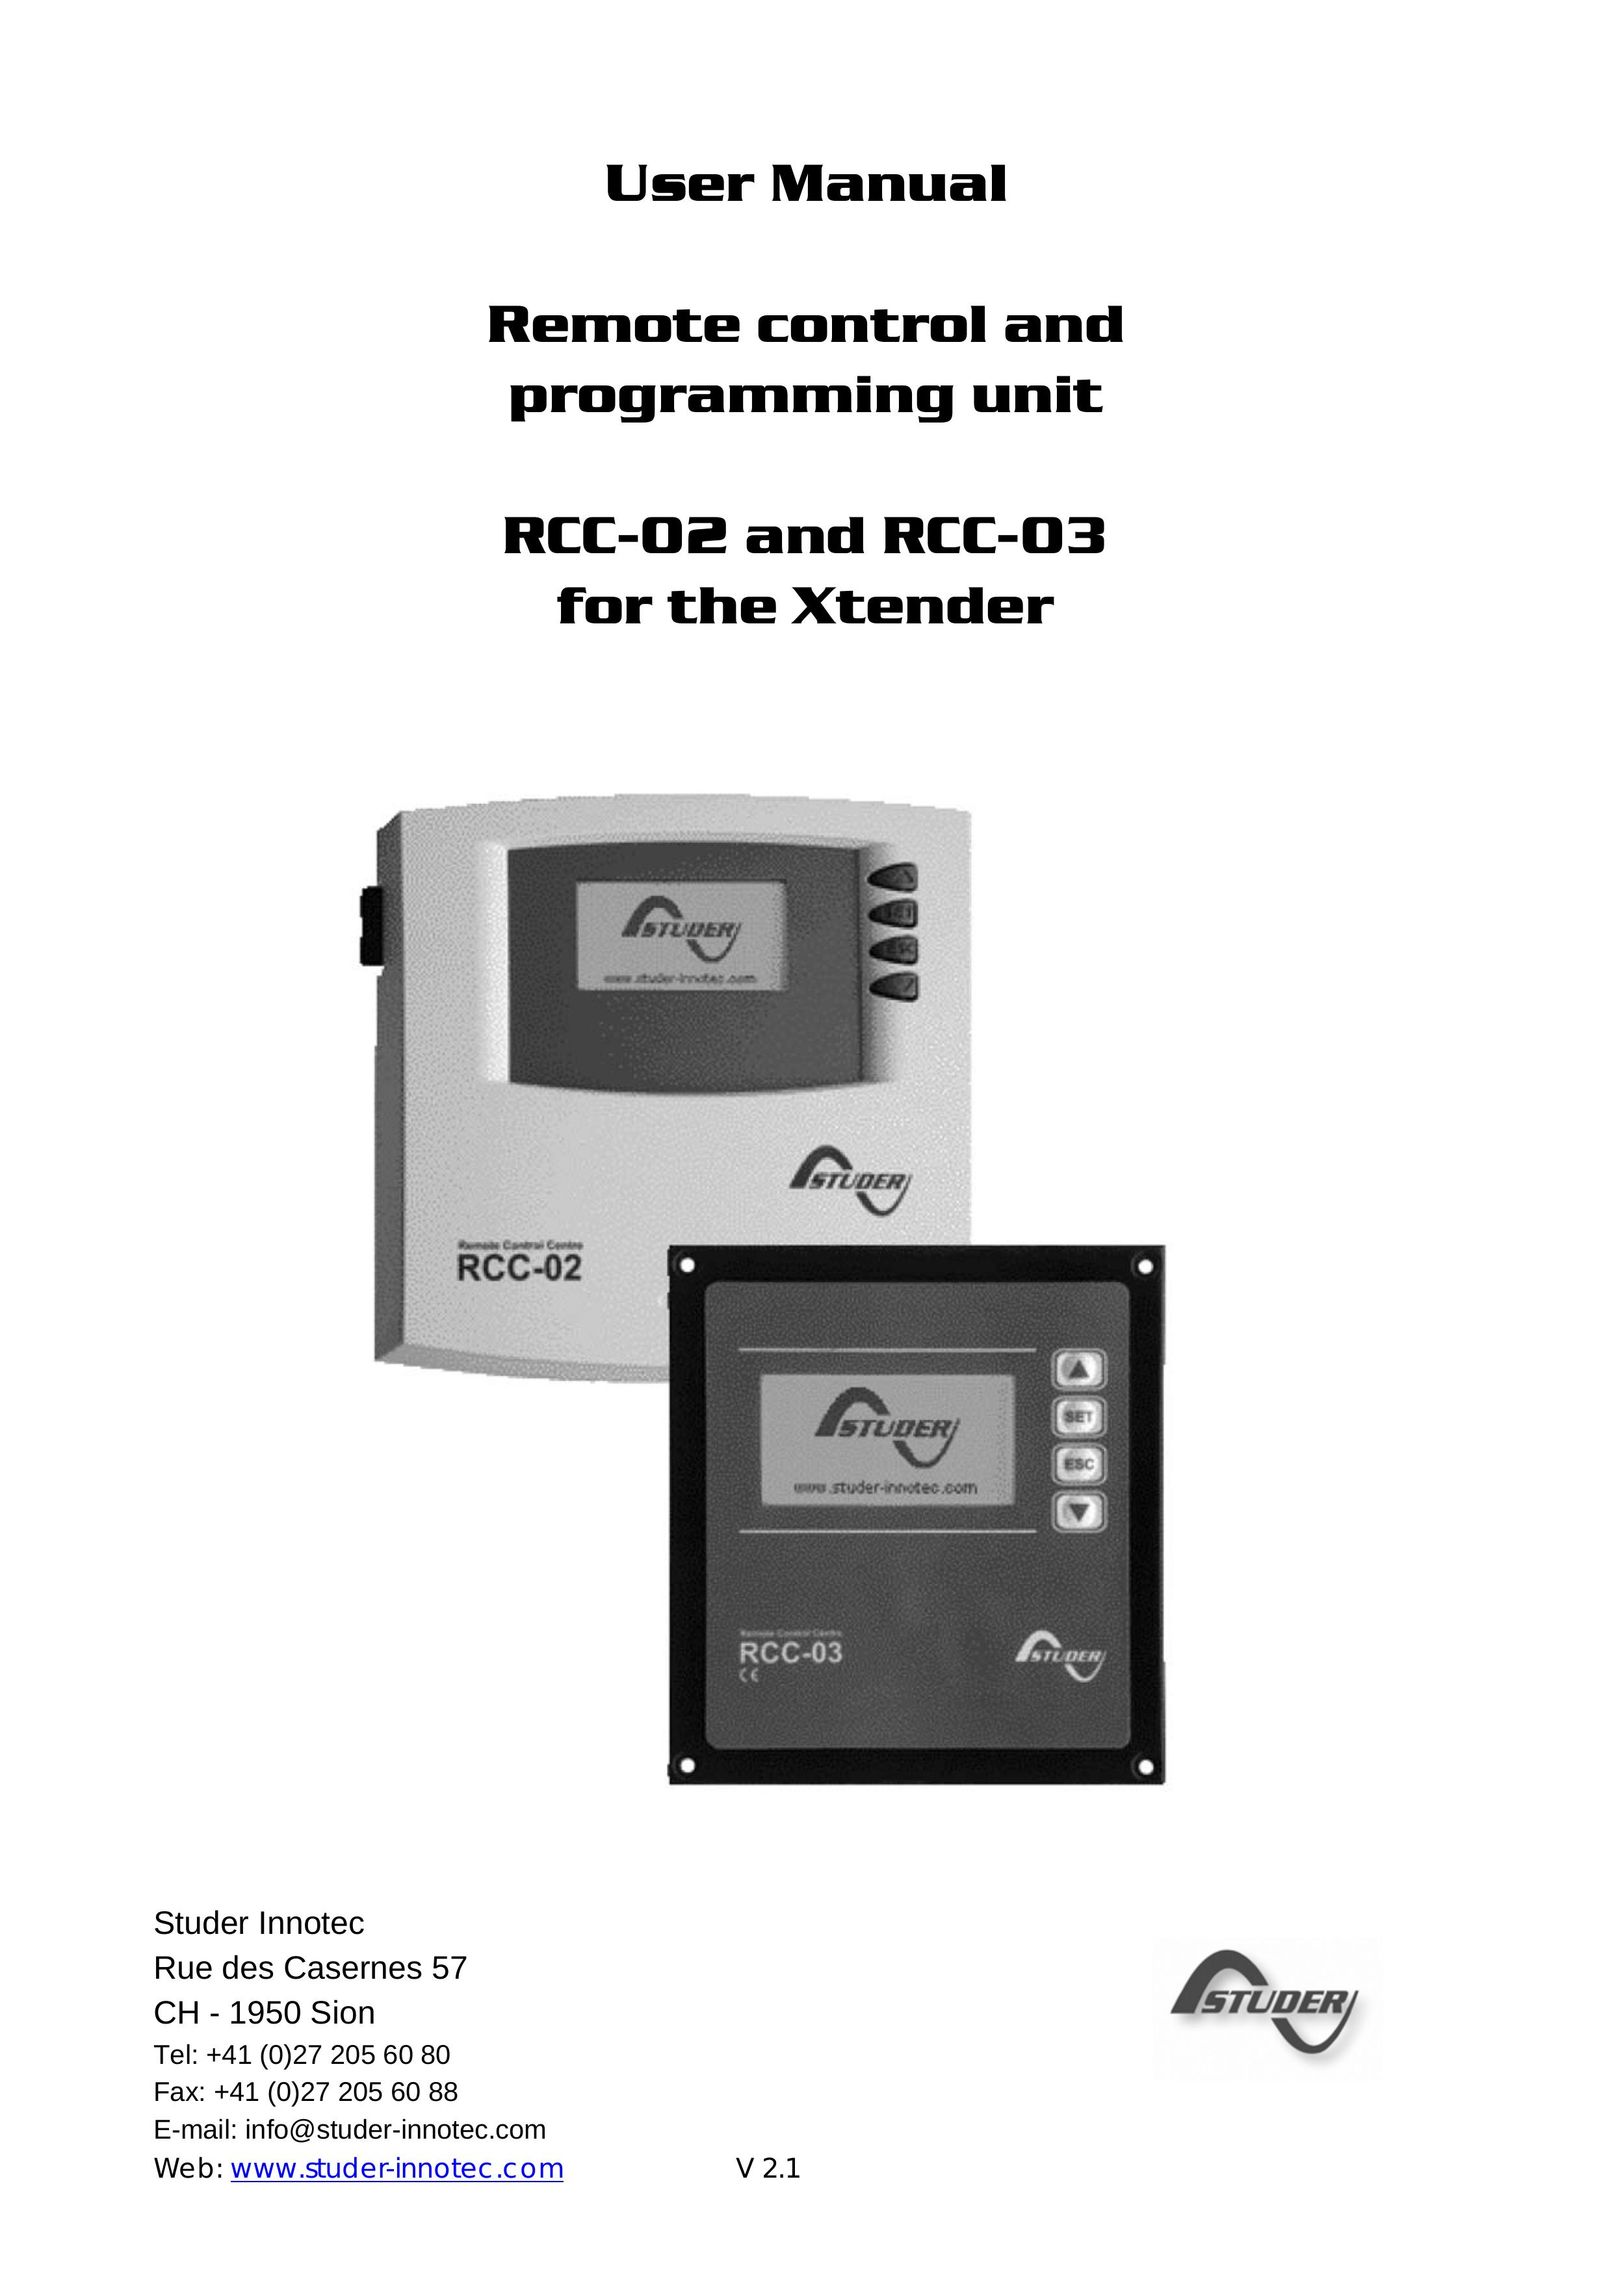 Studer Innotec RCC-02 Universal Remote User Manual